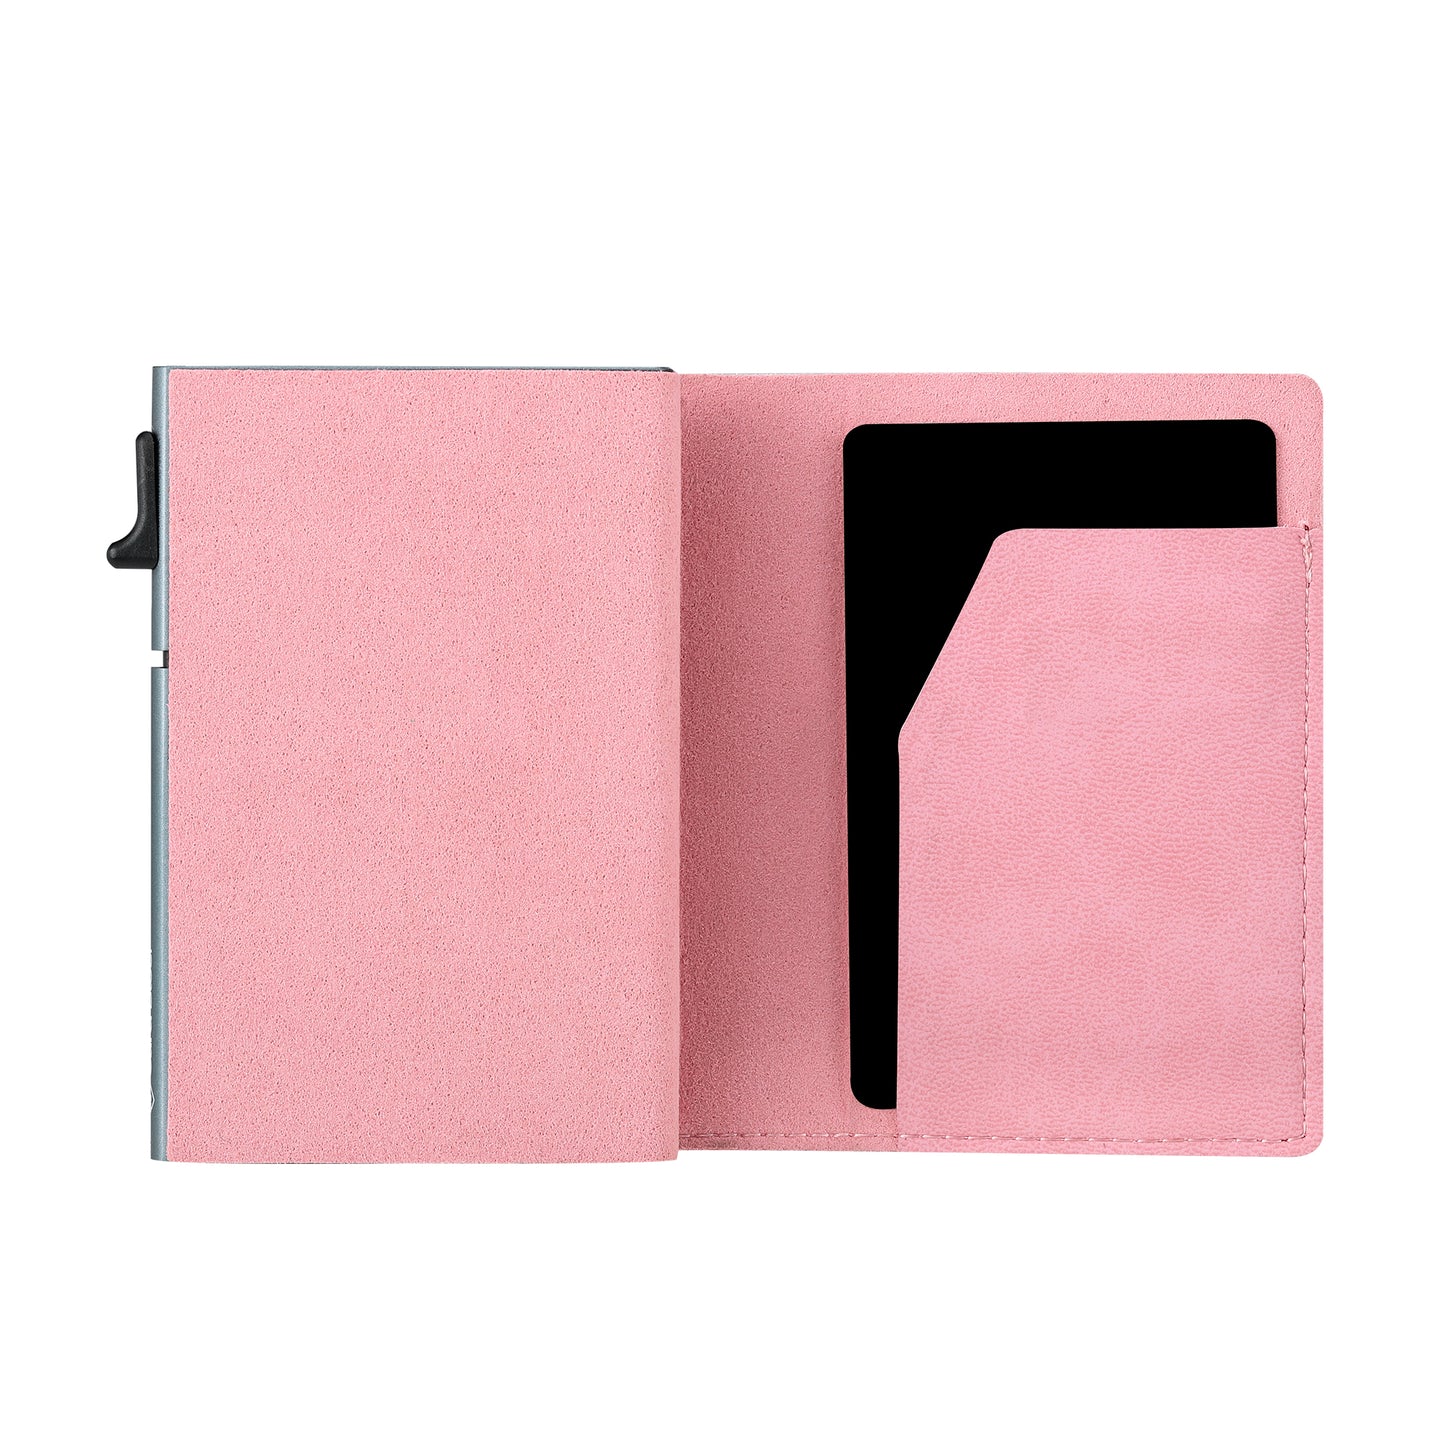 Card Blocr Slim RFID Blocking Credit Card Wallet Pink PU Leather